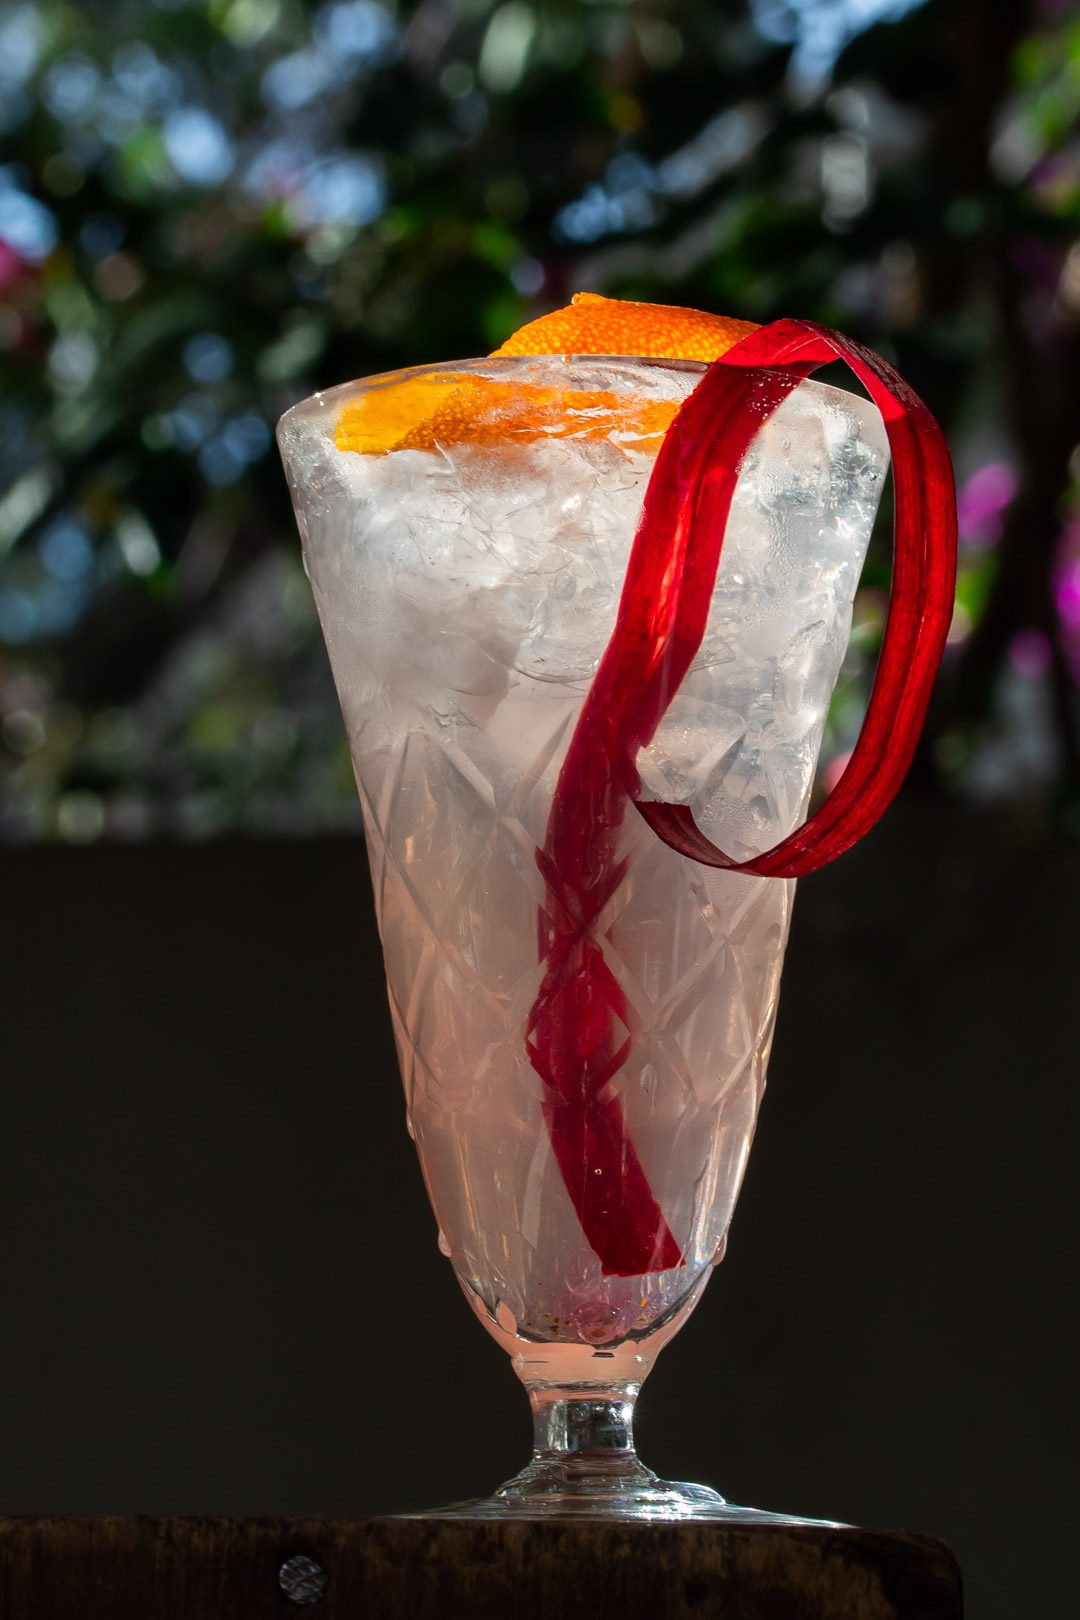 rhubarb shrub gin fix cocktail with rhubarb ribbon and orange twist garnish to side